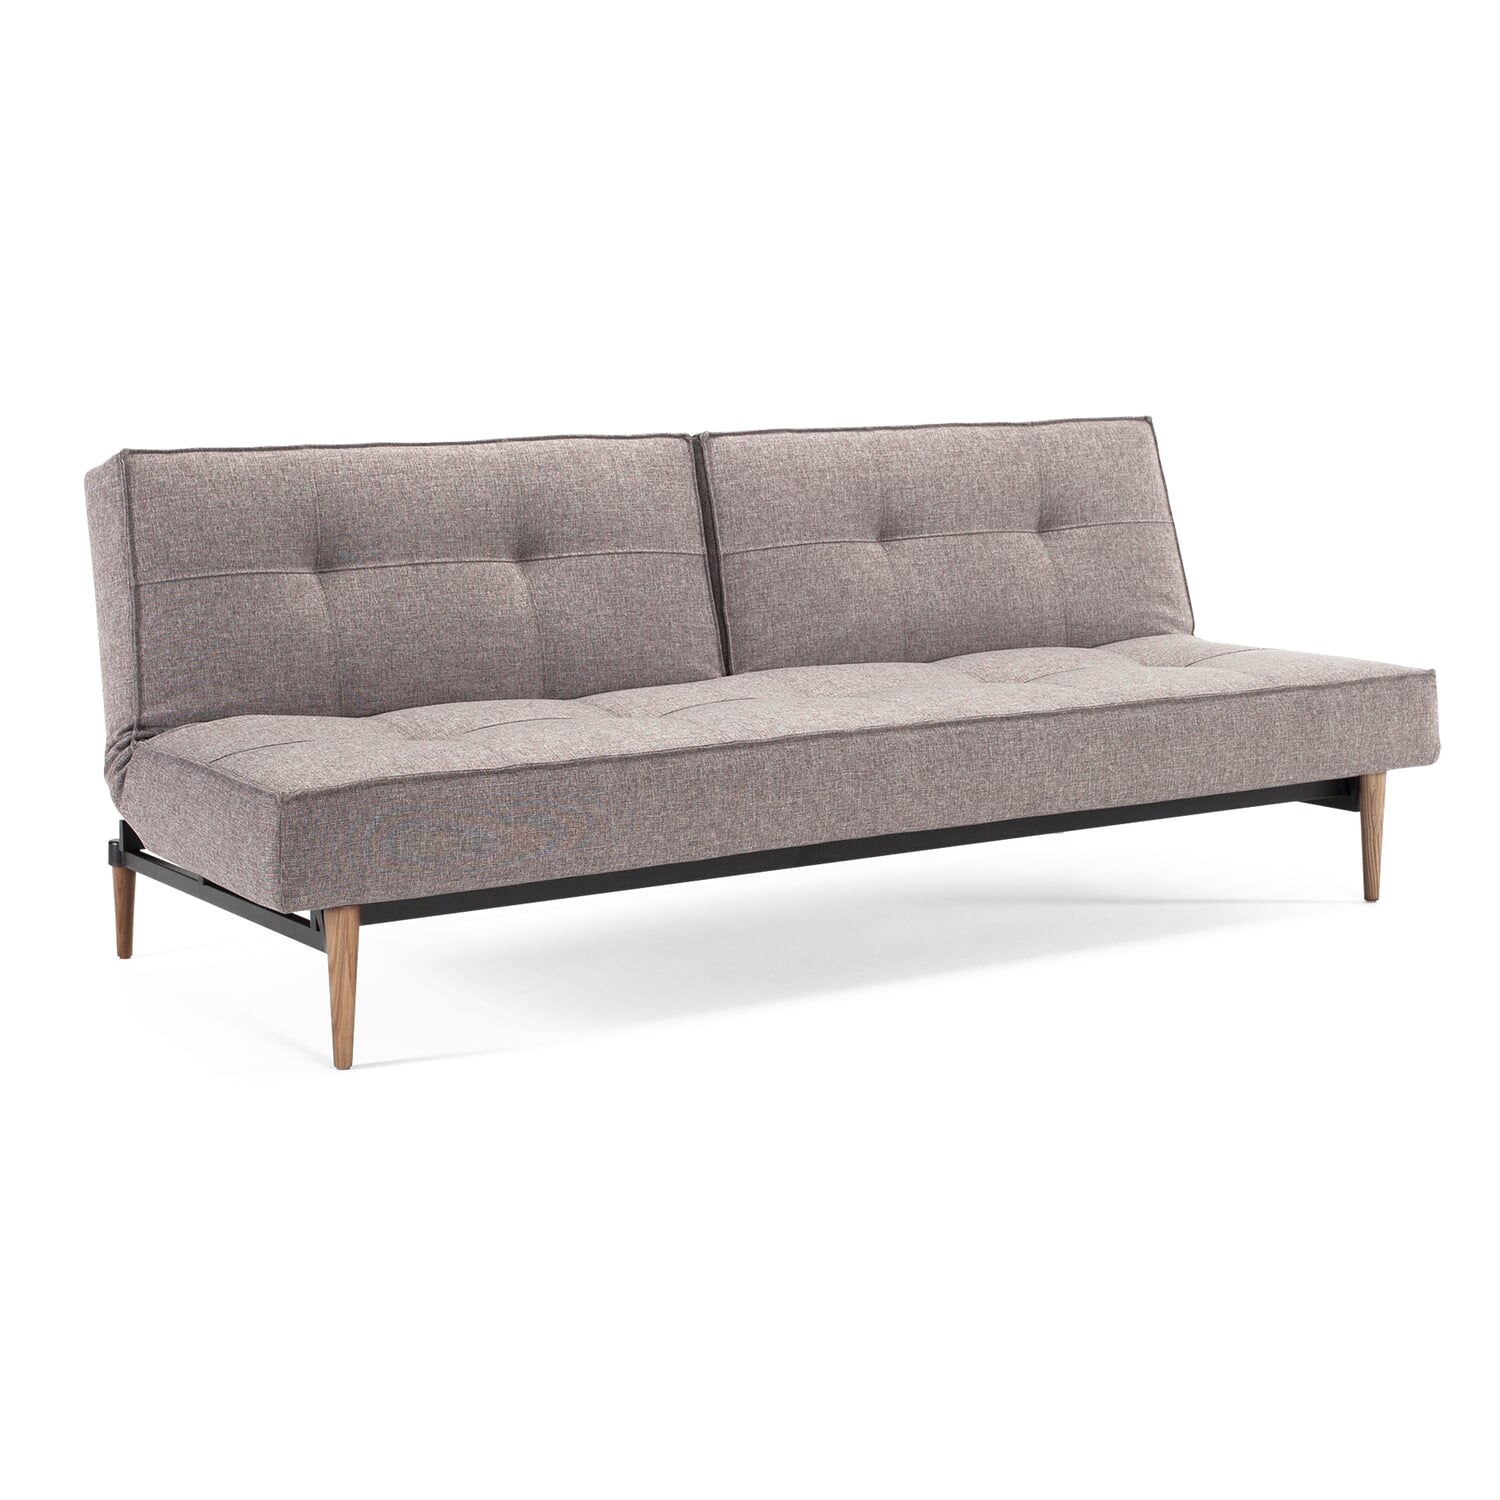 Manufactum bed, sofa | Gray Splitback